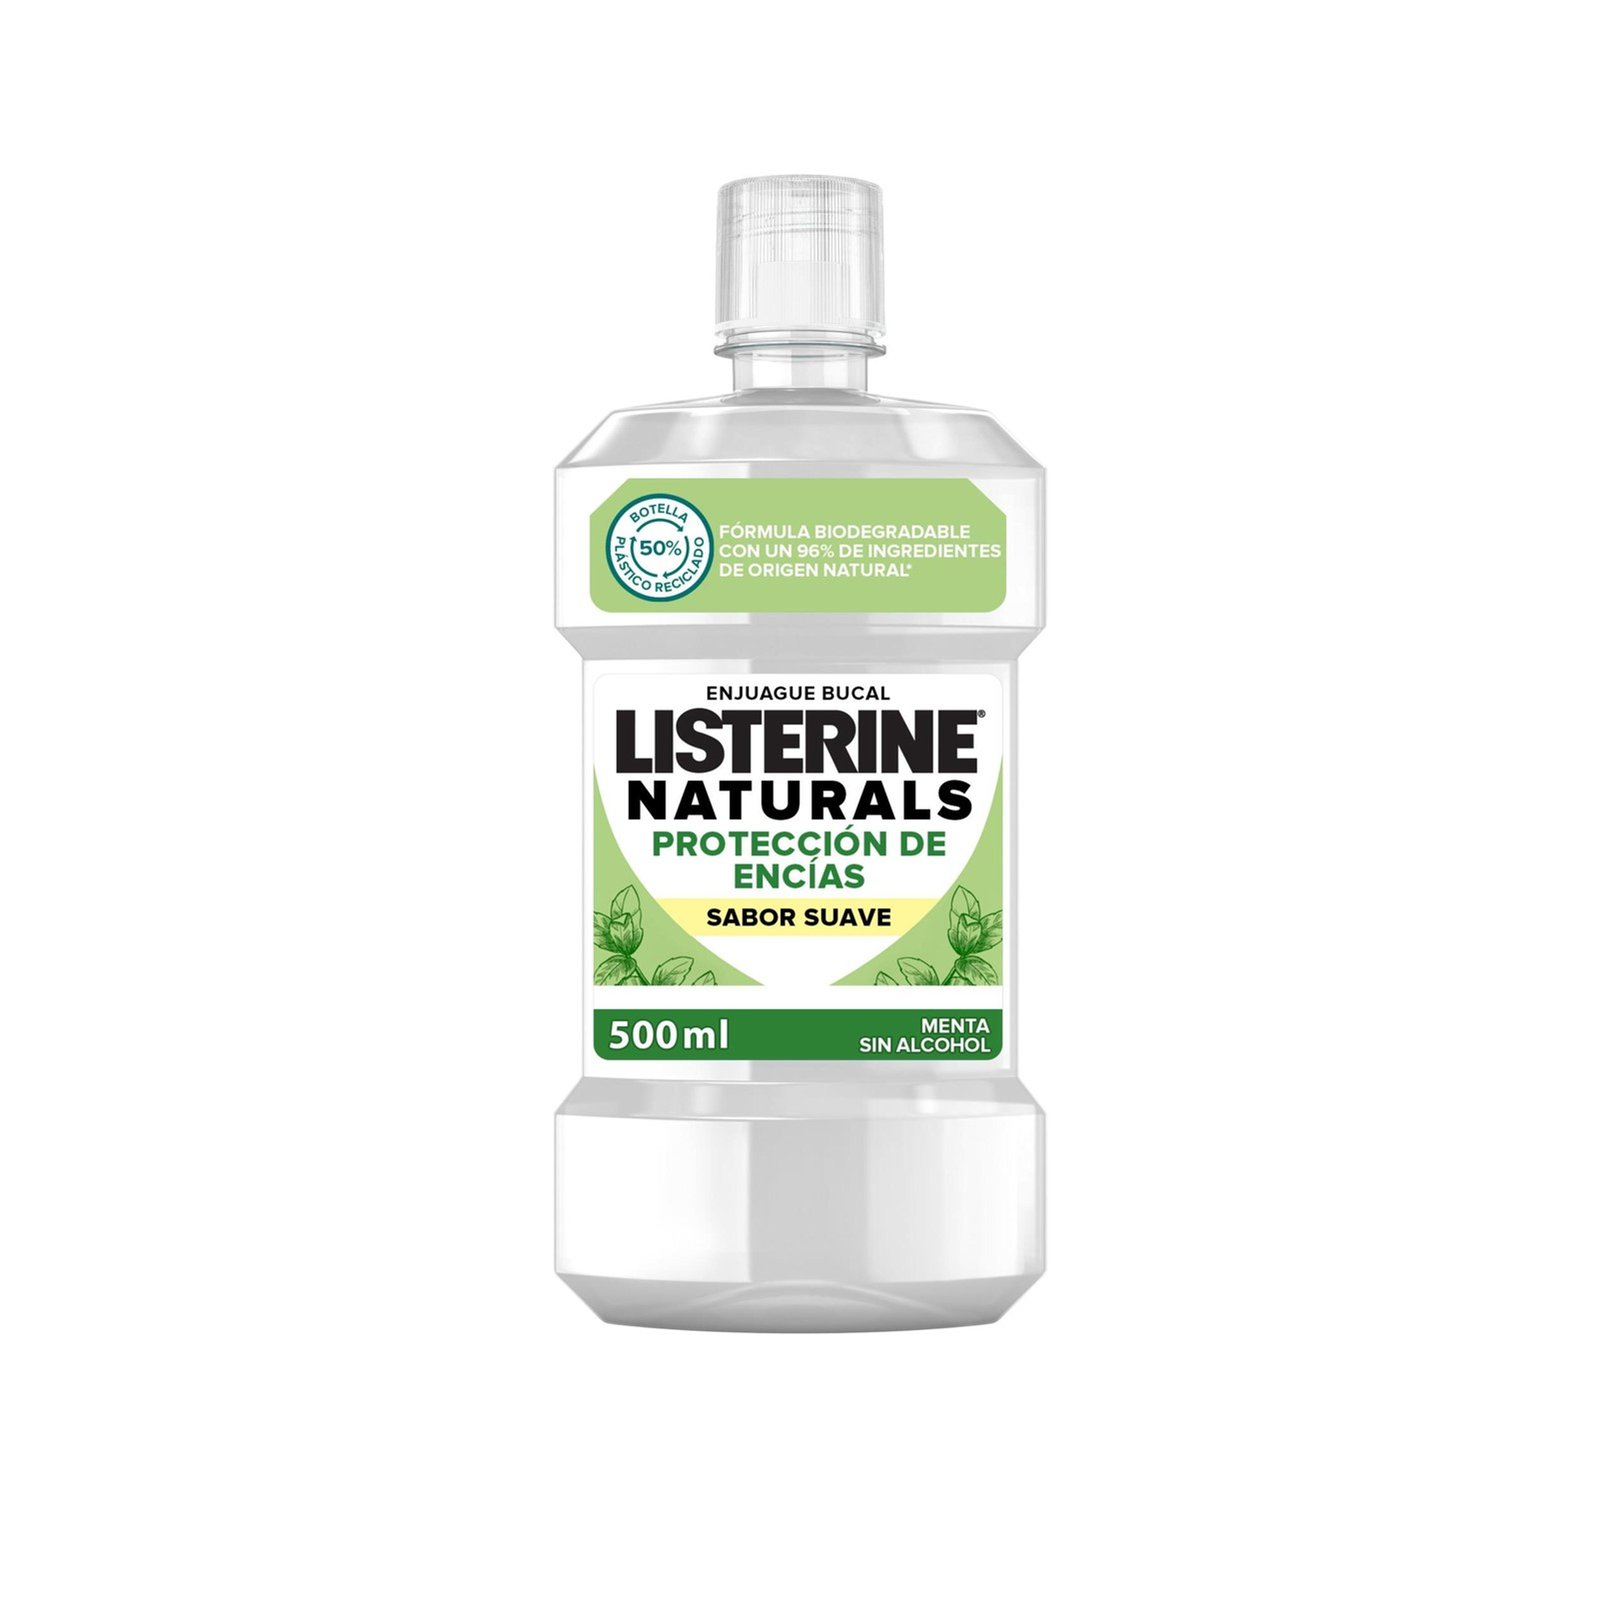 Listerine Naturals Gum Protect Mild Taste Mouthwash 500ml (16.9 fl oz)